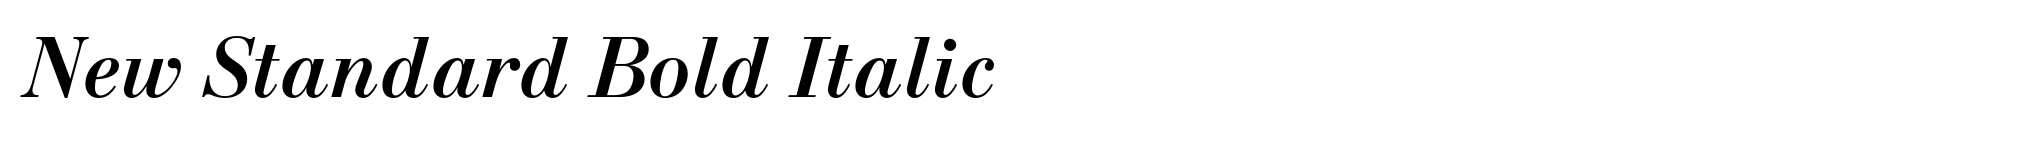 New Standard Bold Italic image